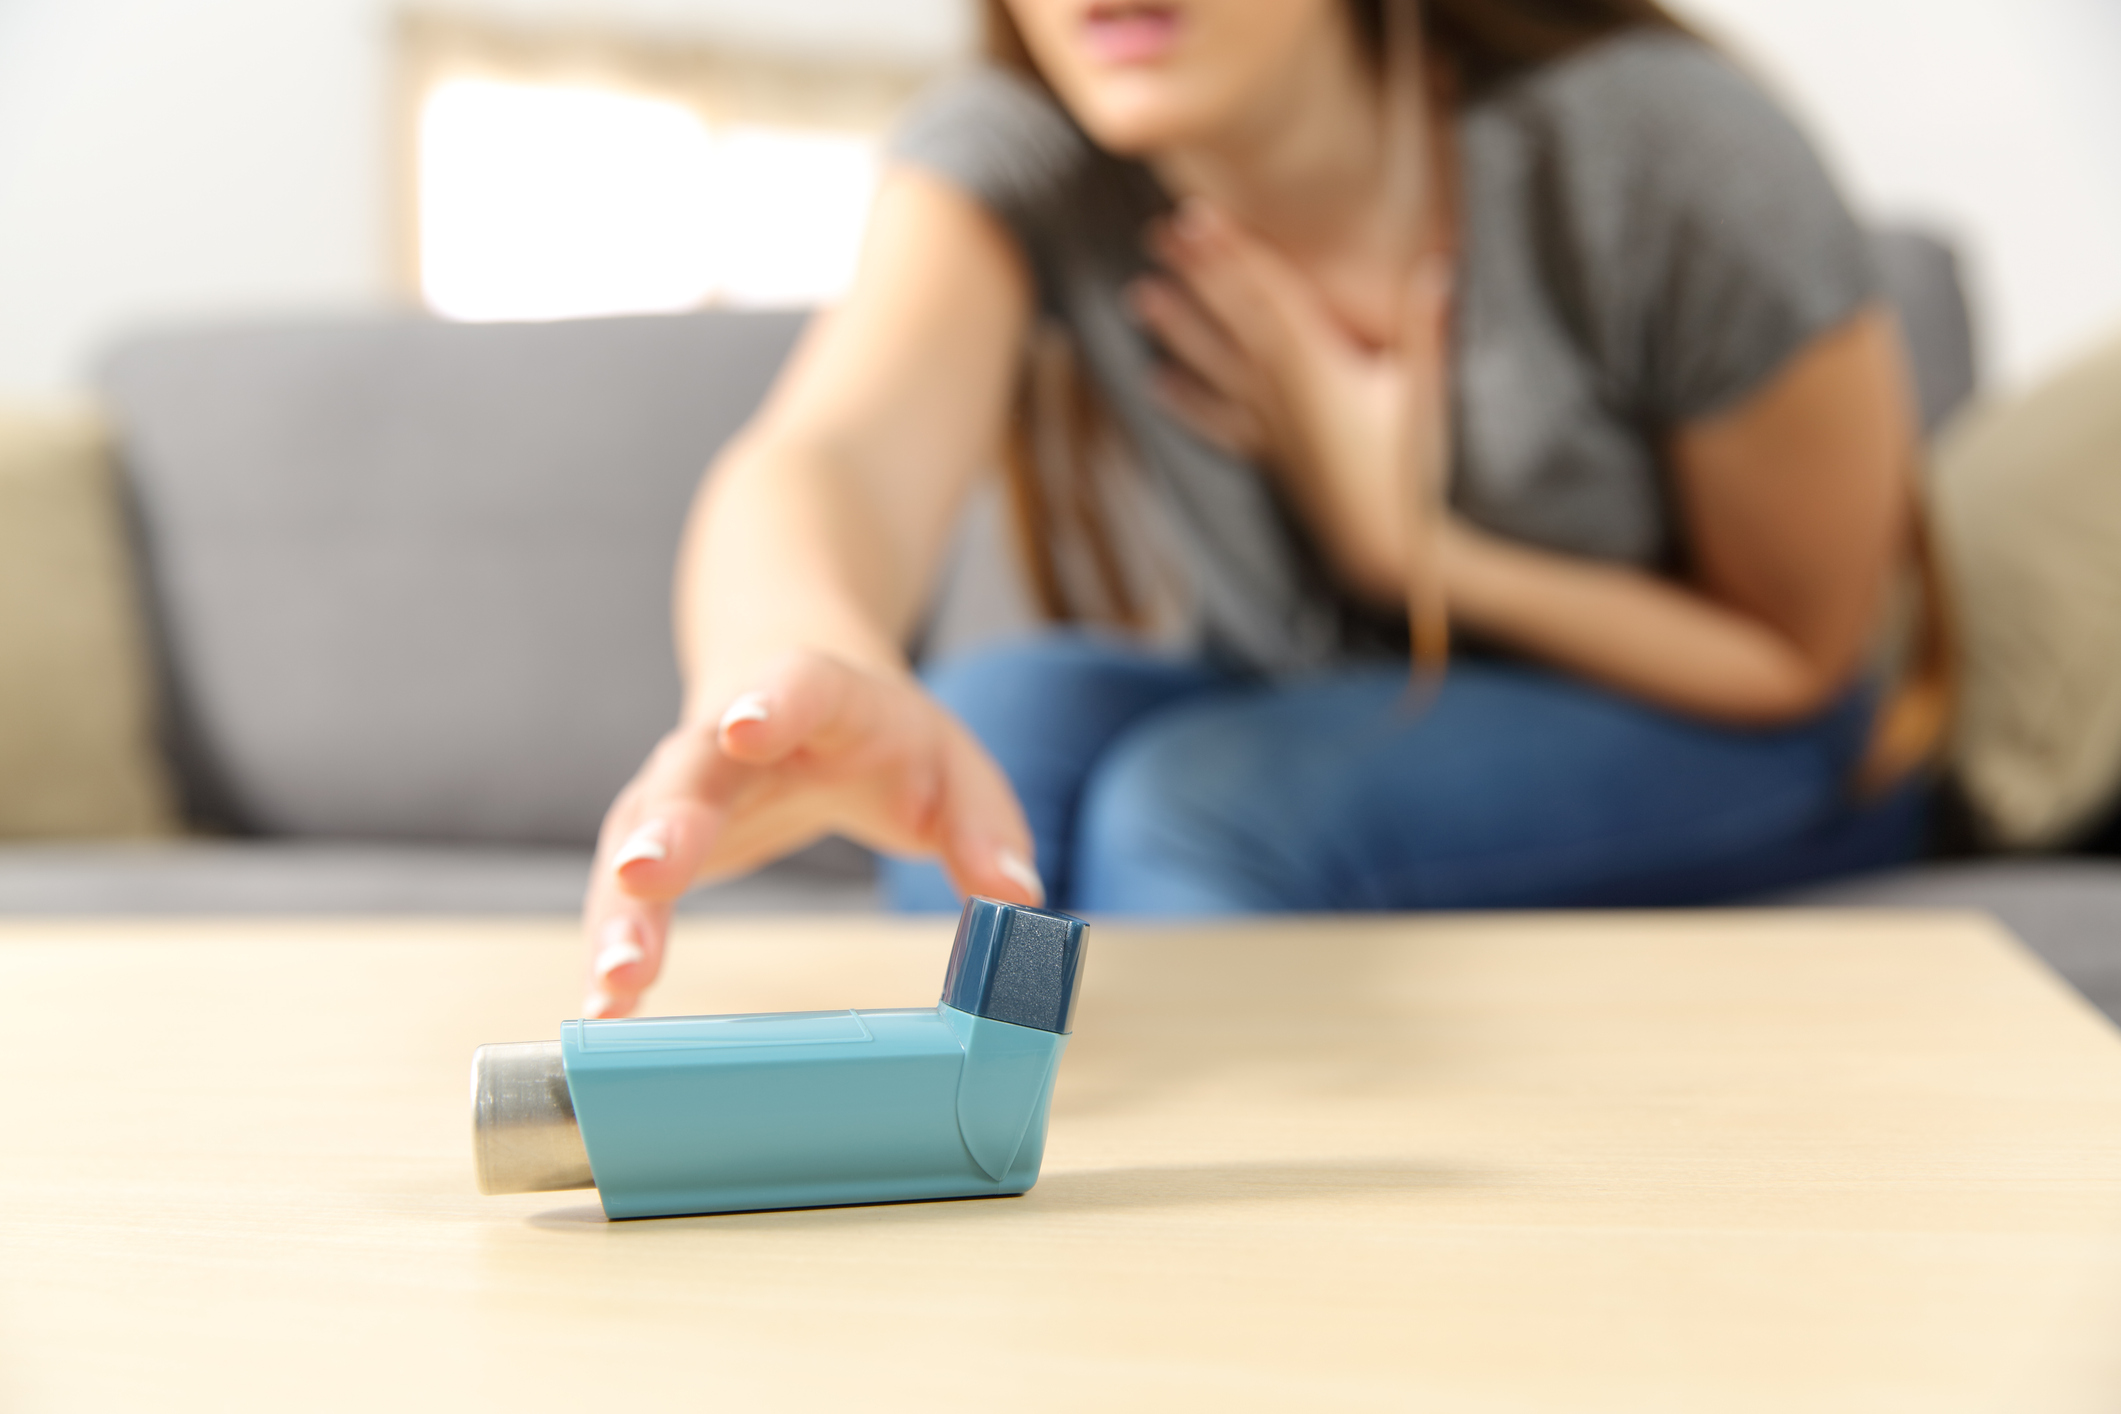 Crise d'asthme